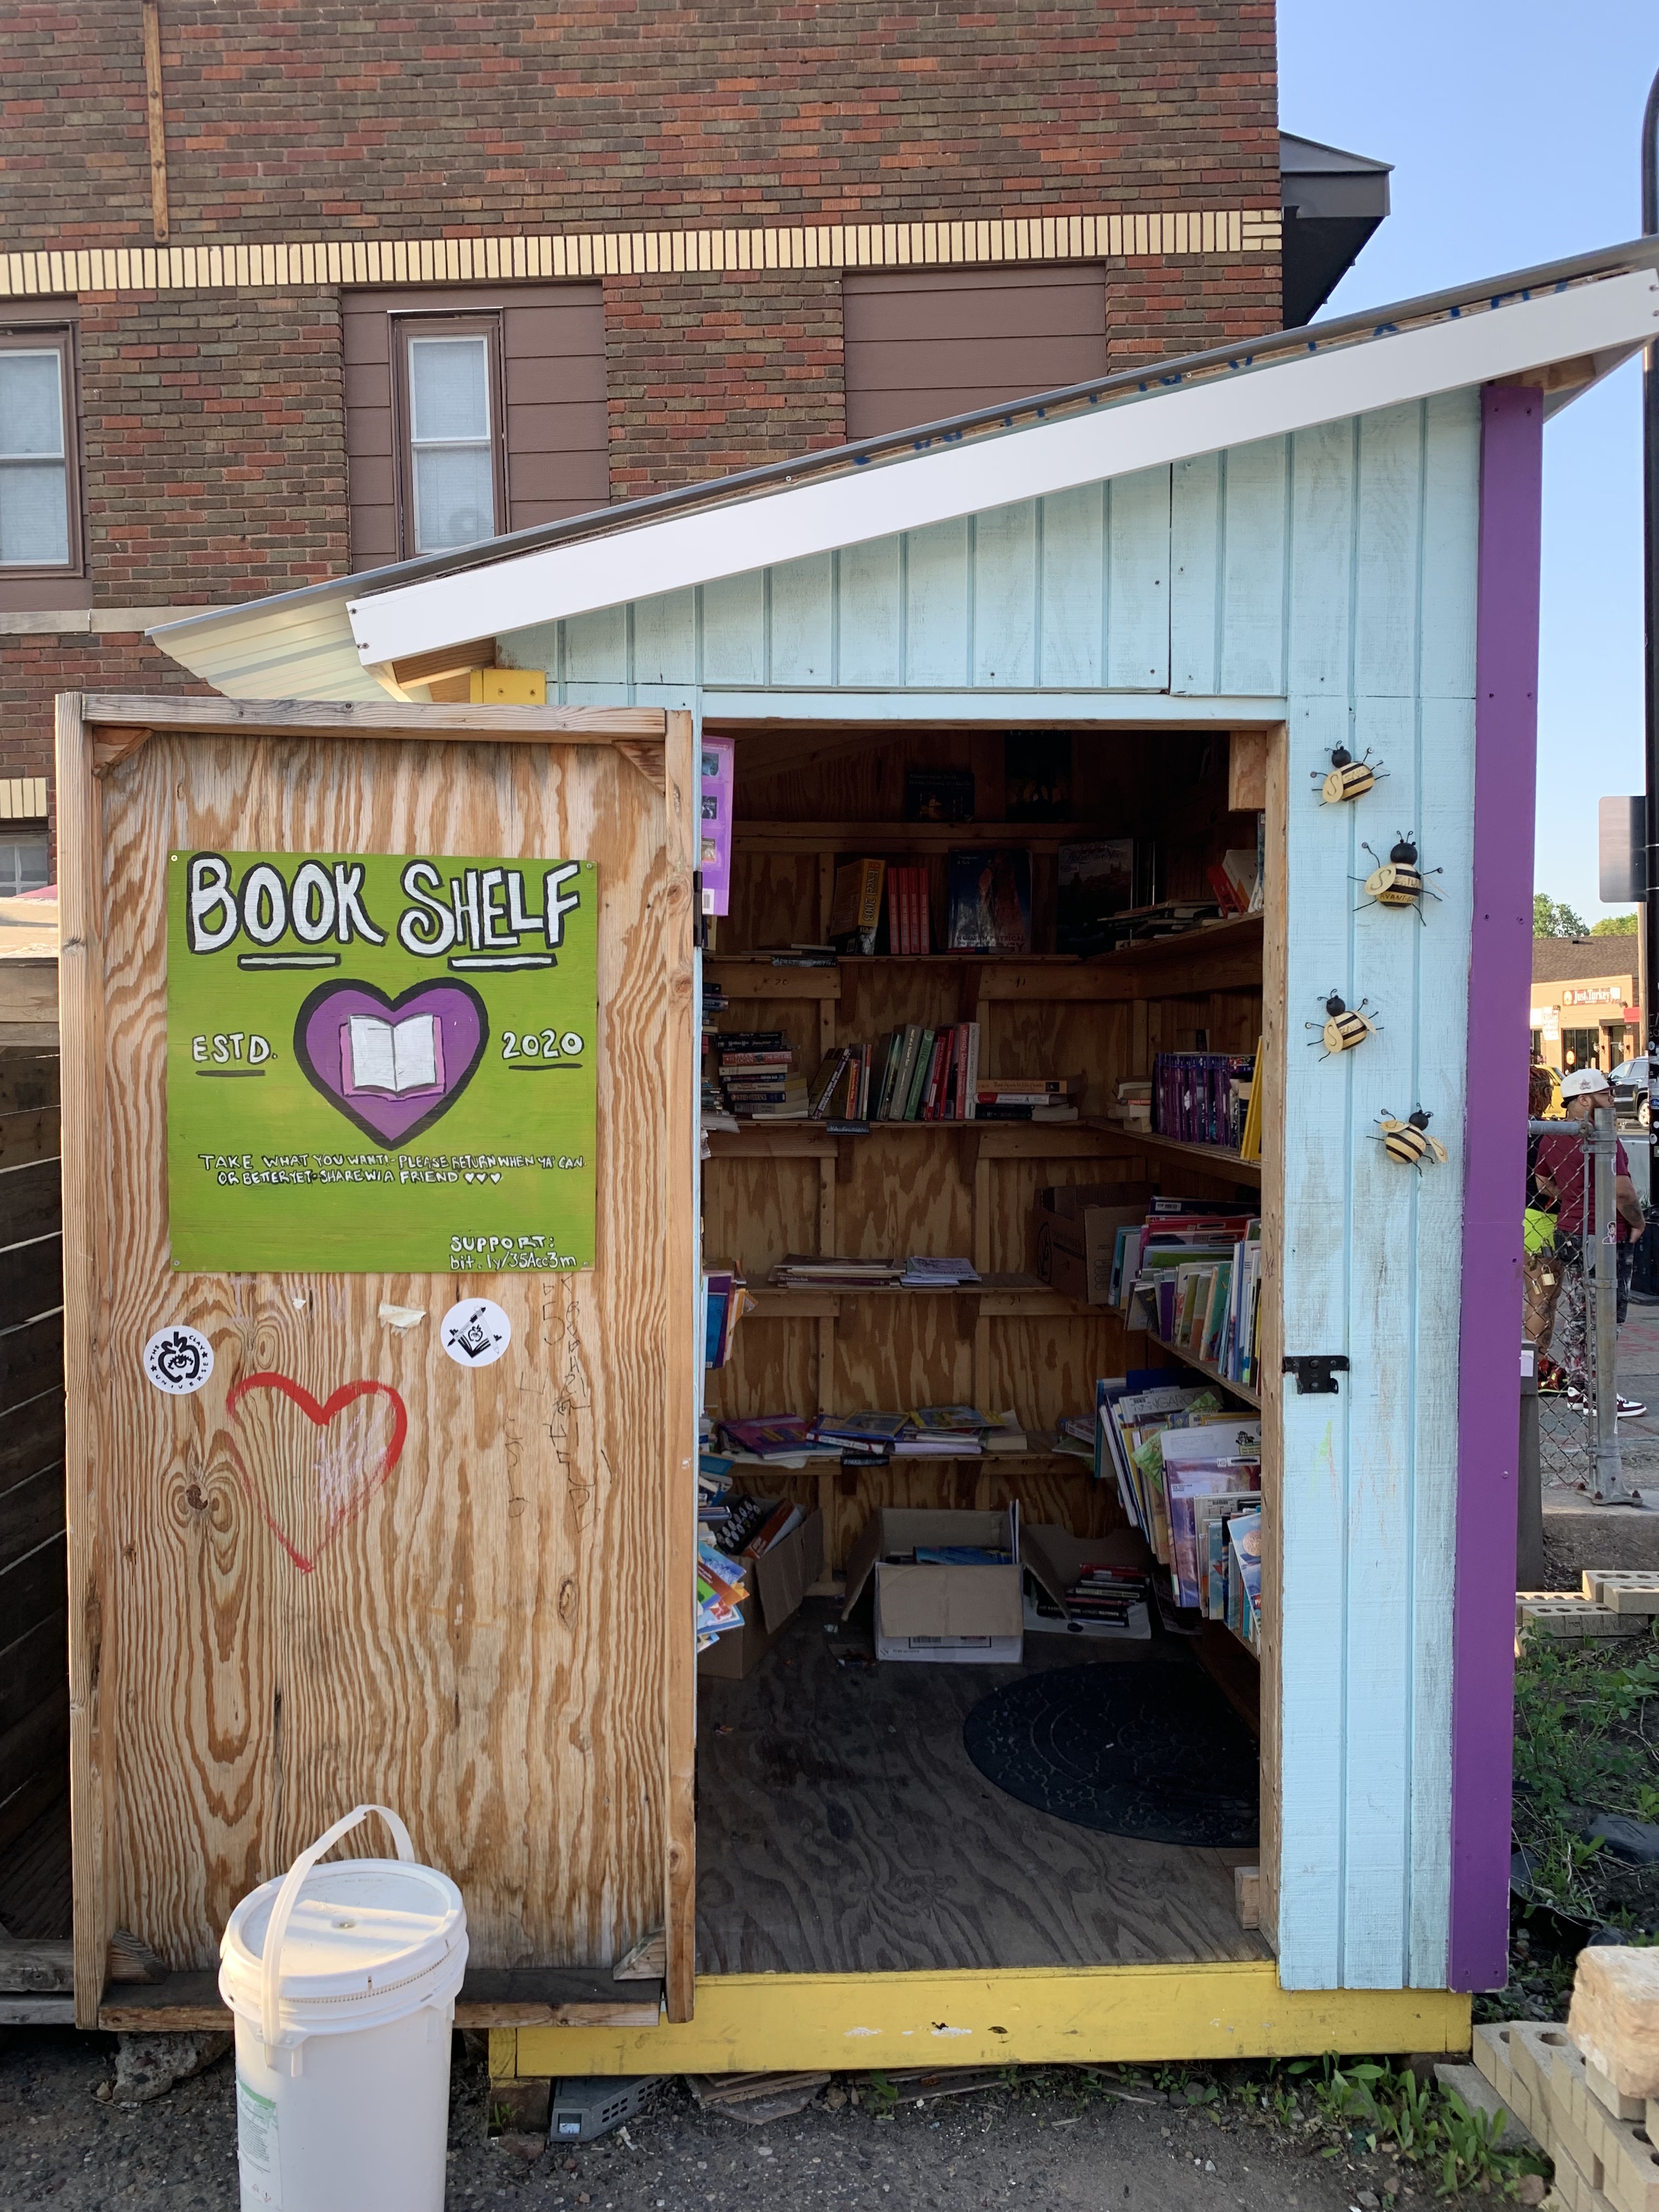 Community bookshelf in George Floyd Square.